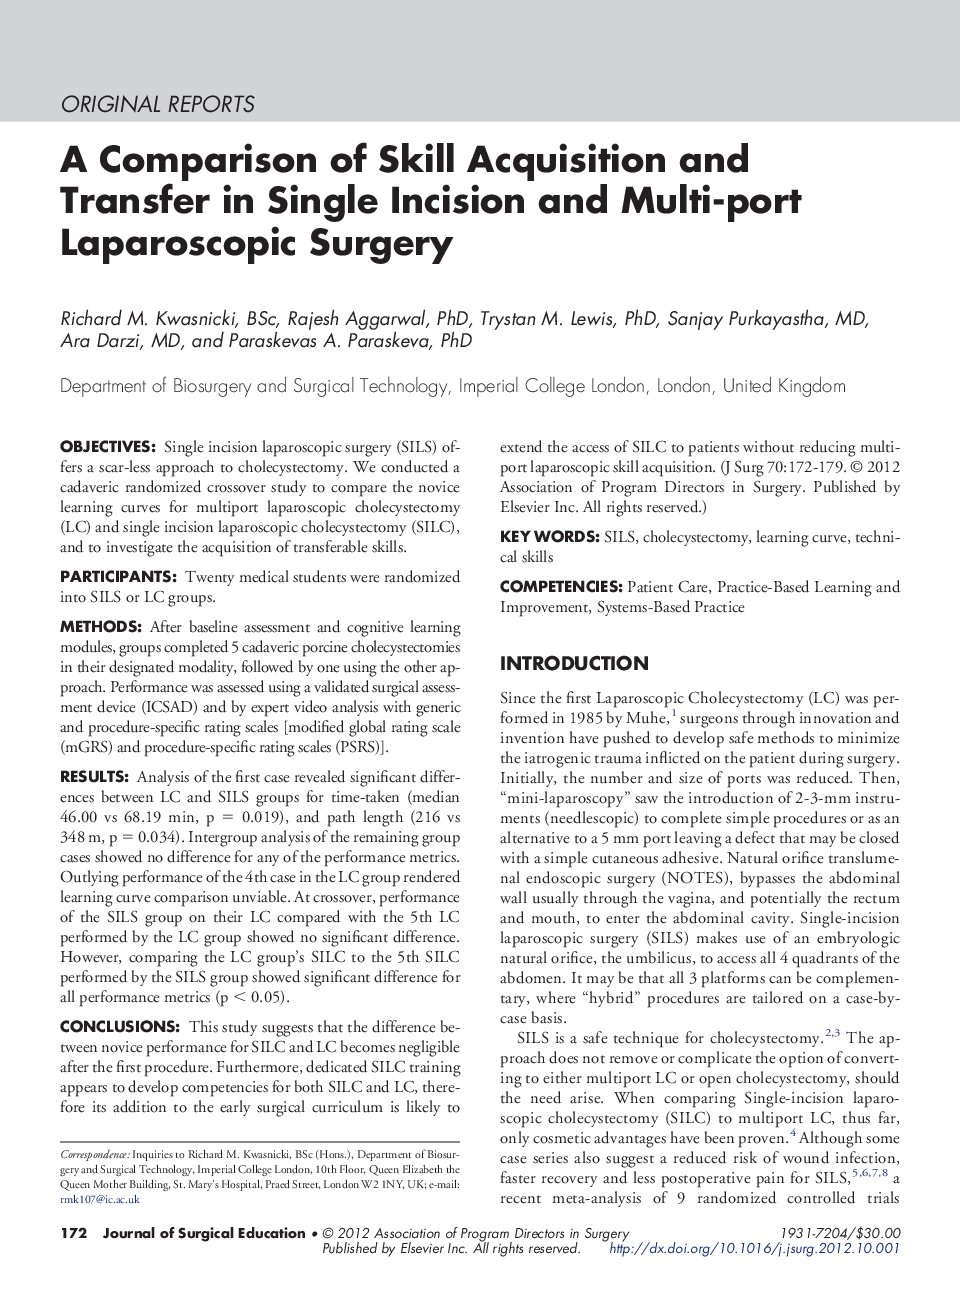 A Comparison of Skill Acquisition and Transfer in Single Incision and Multi-port Laparoscopic Surgery